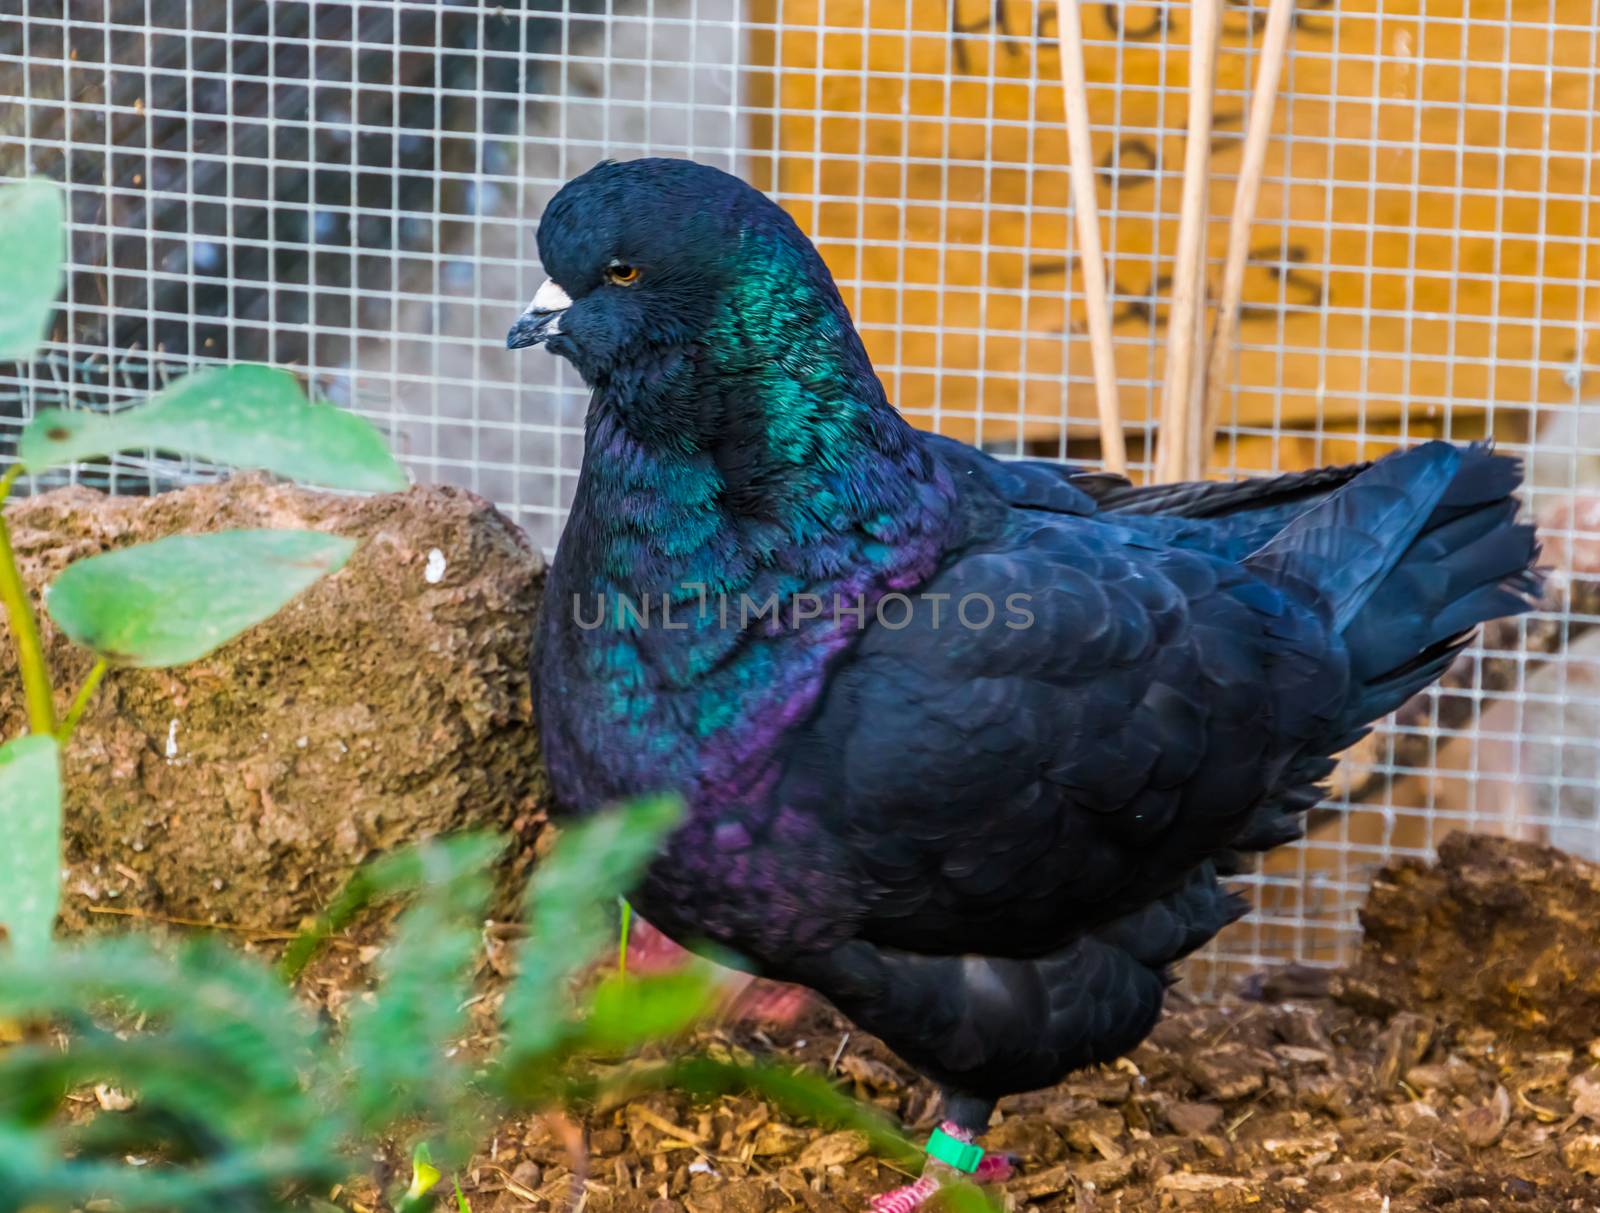 closeup portrait of a black king pigeon, popular tropical bird specie by charlottebleijenberg